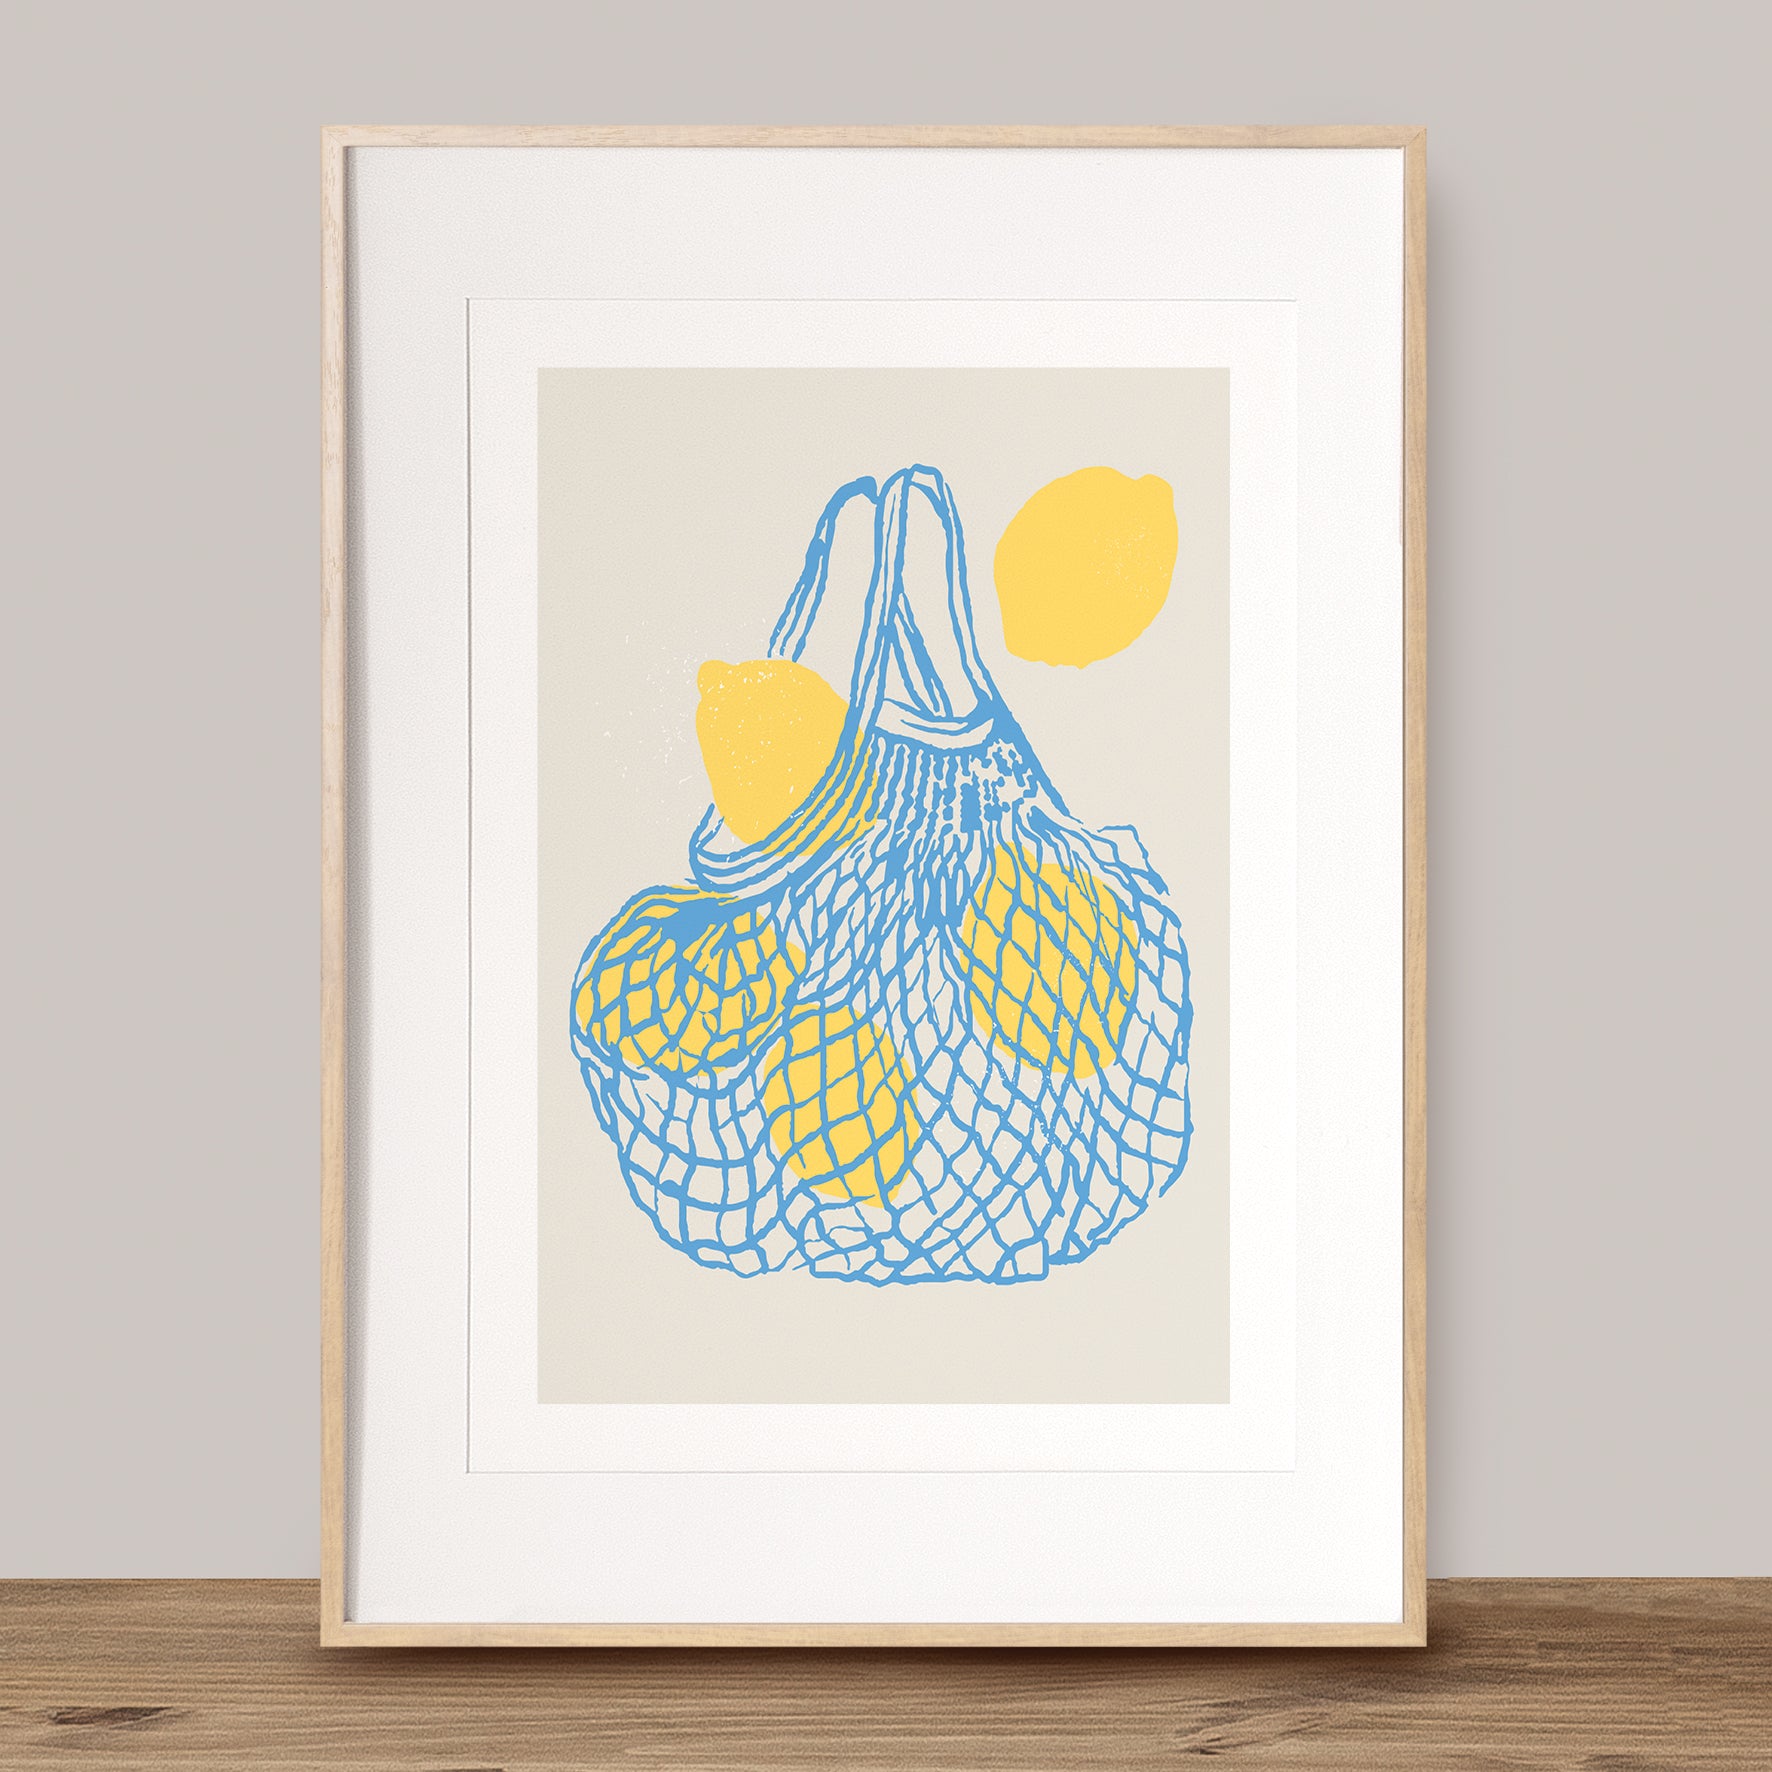 bag of lemons